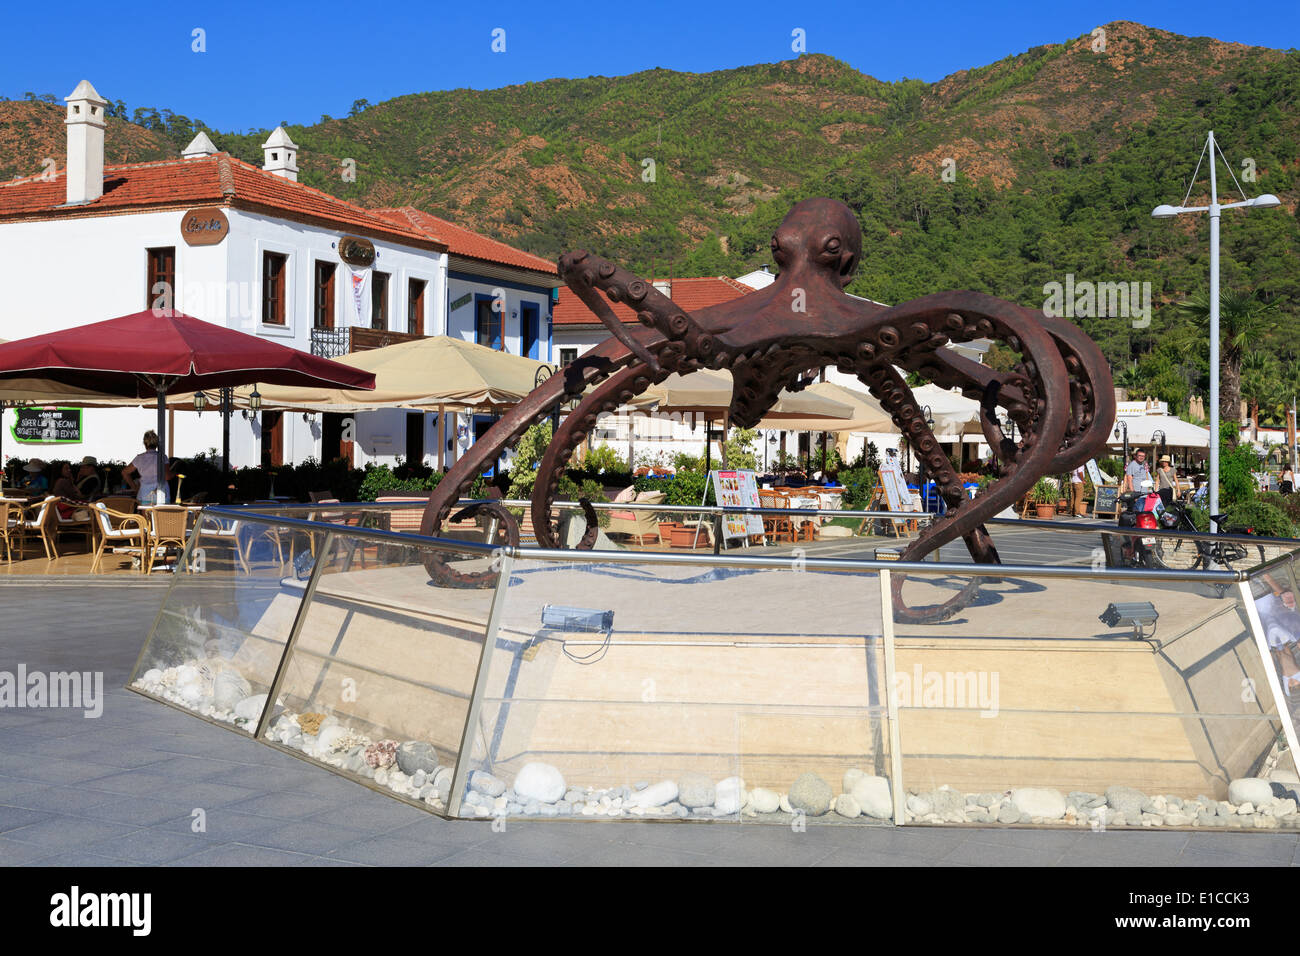 Octopus sculpture in Old Town, Marmaris, Turkey, Mediterranean Stock Photo